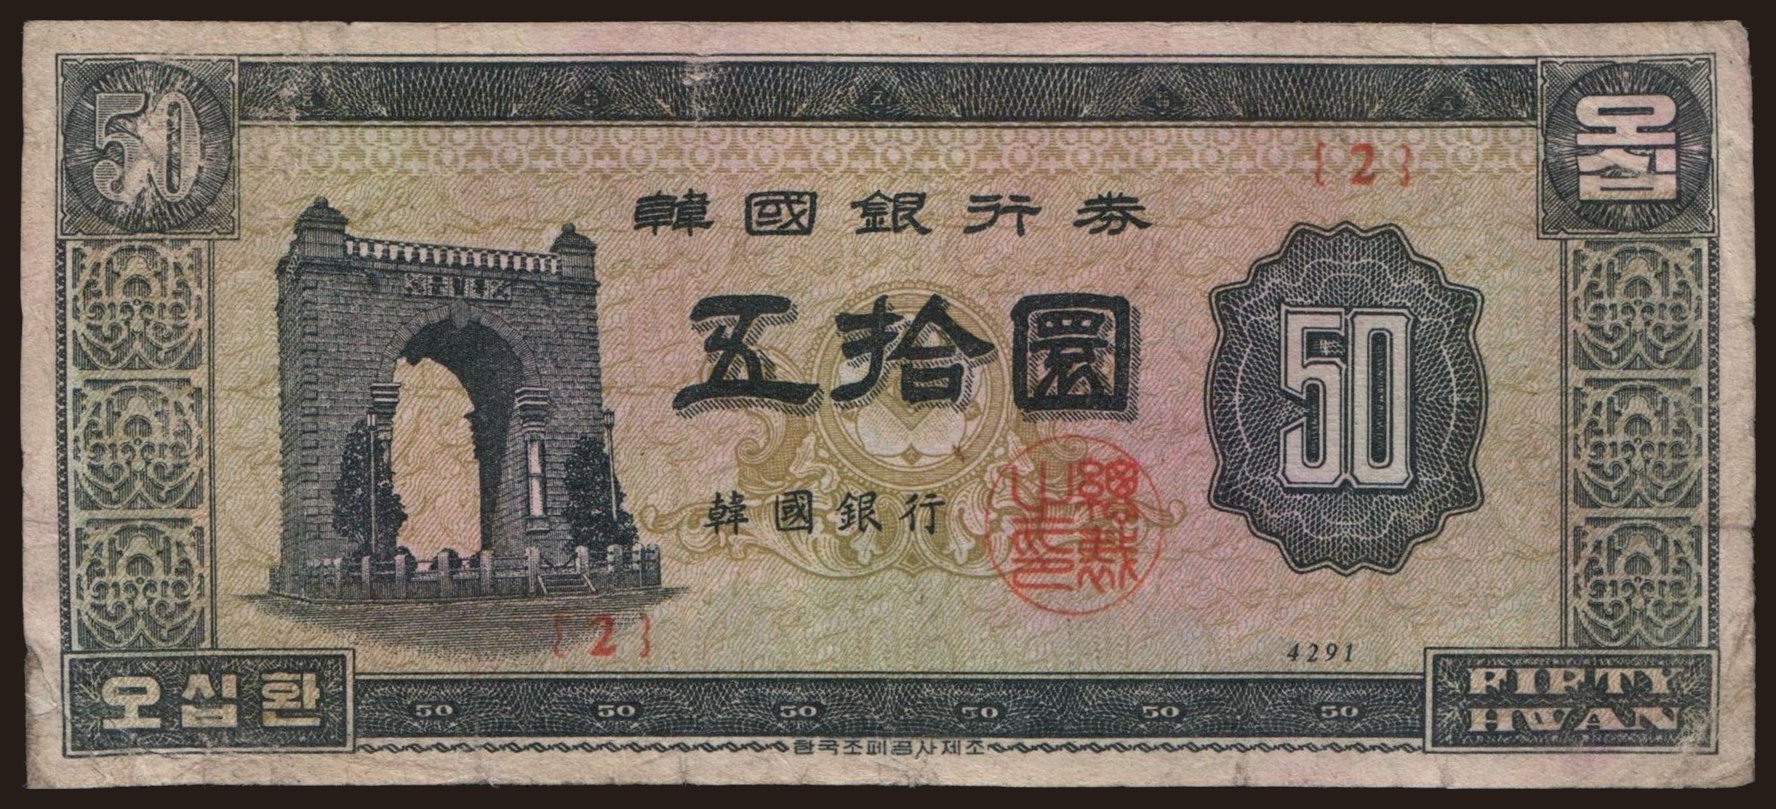 50 hwan, 1958